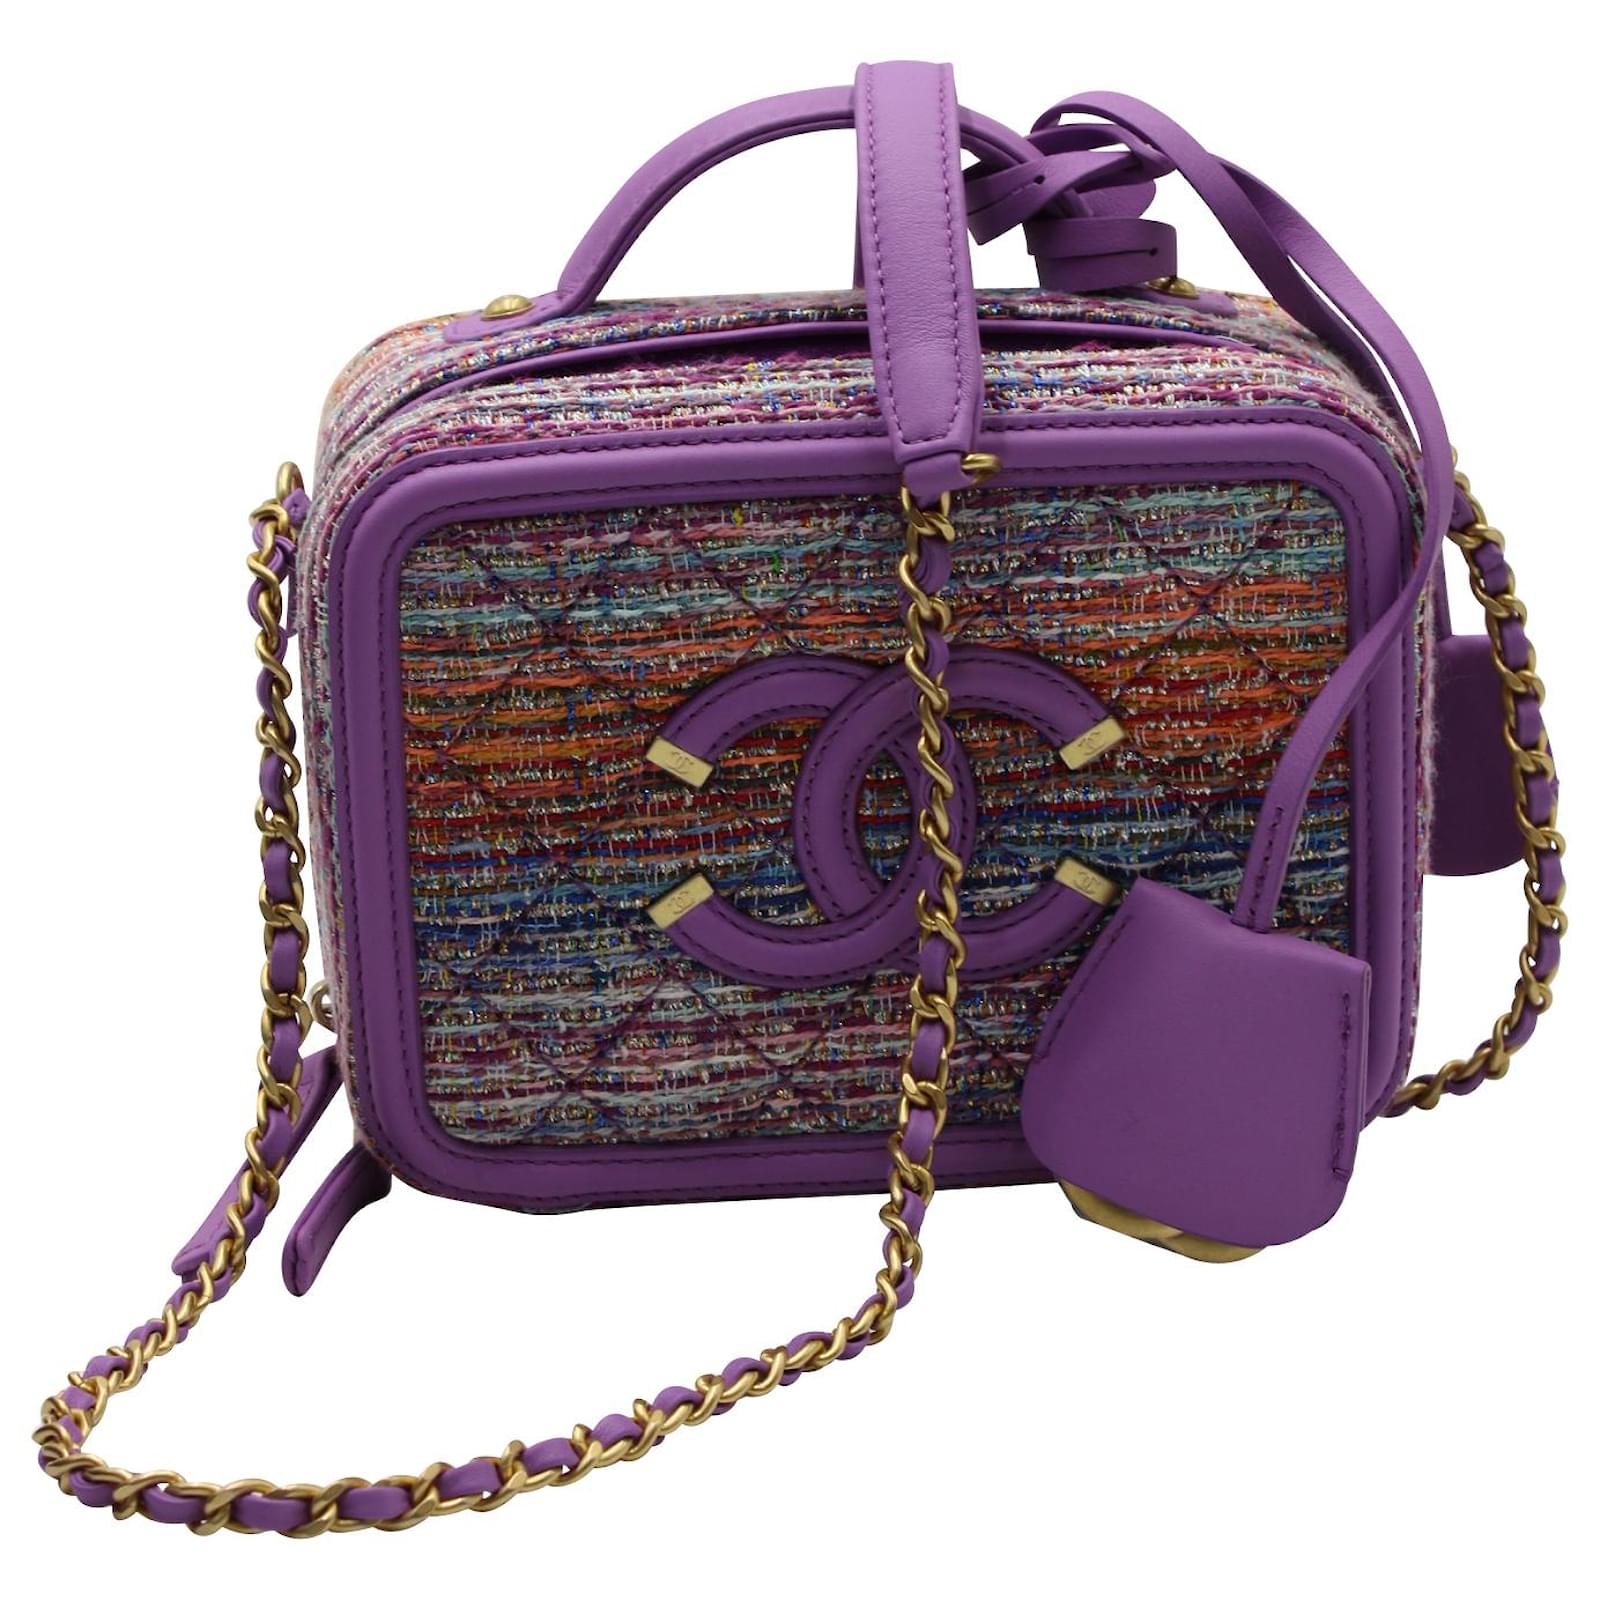 Chanel Tweed Quilted Filigree Vanity Bag in Purple Leather